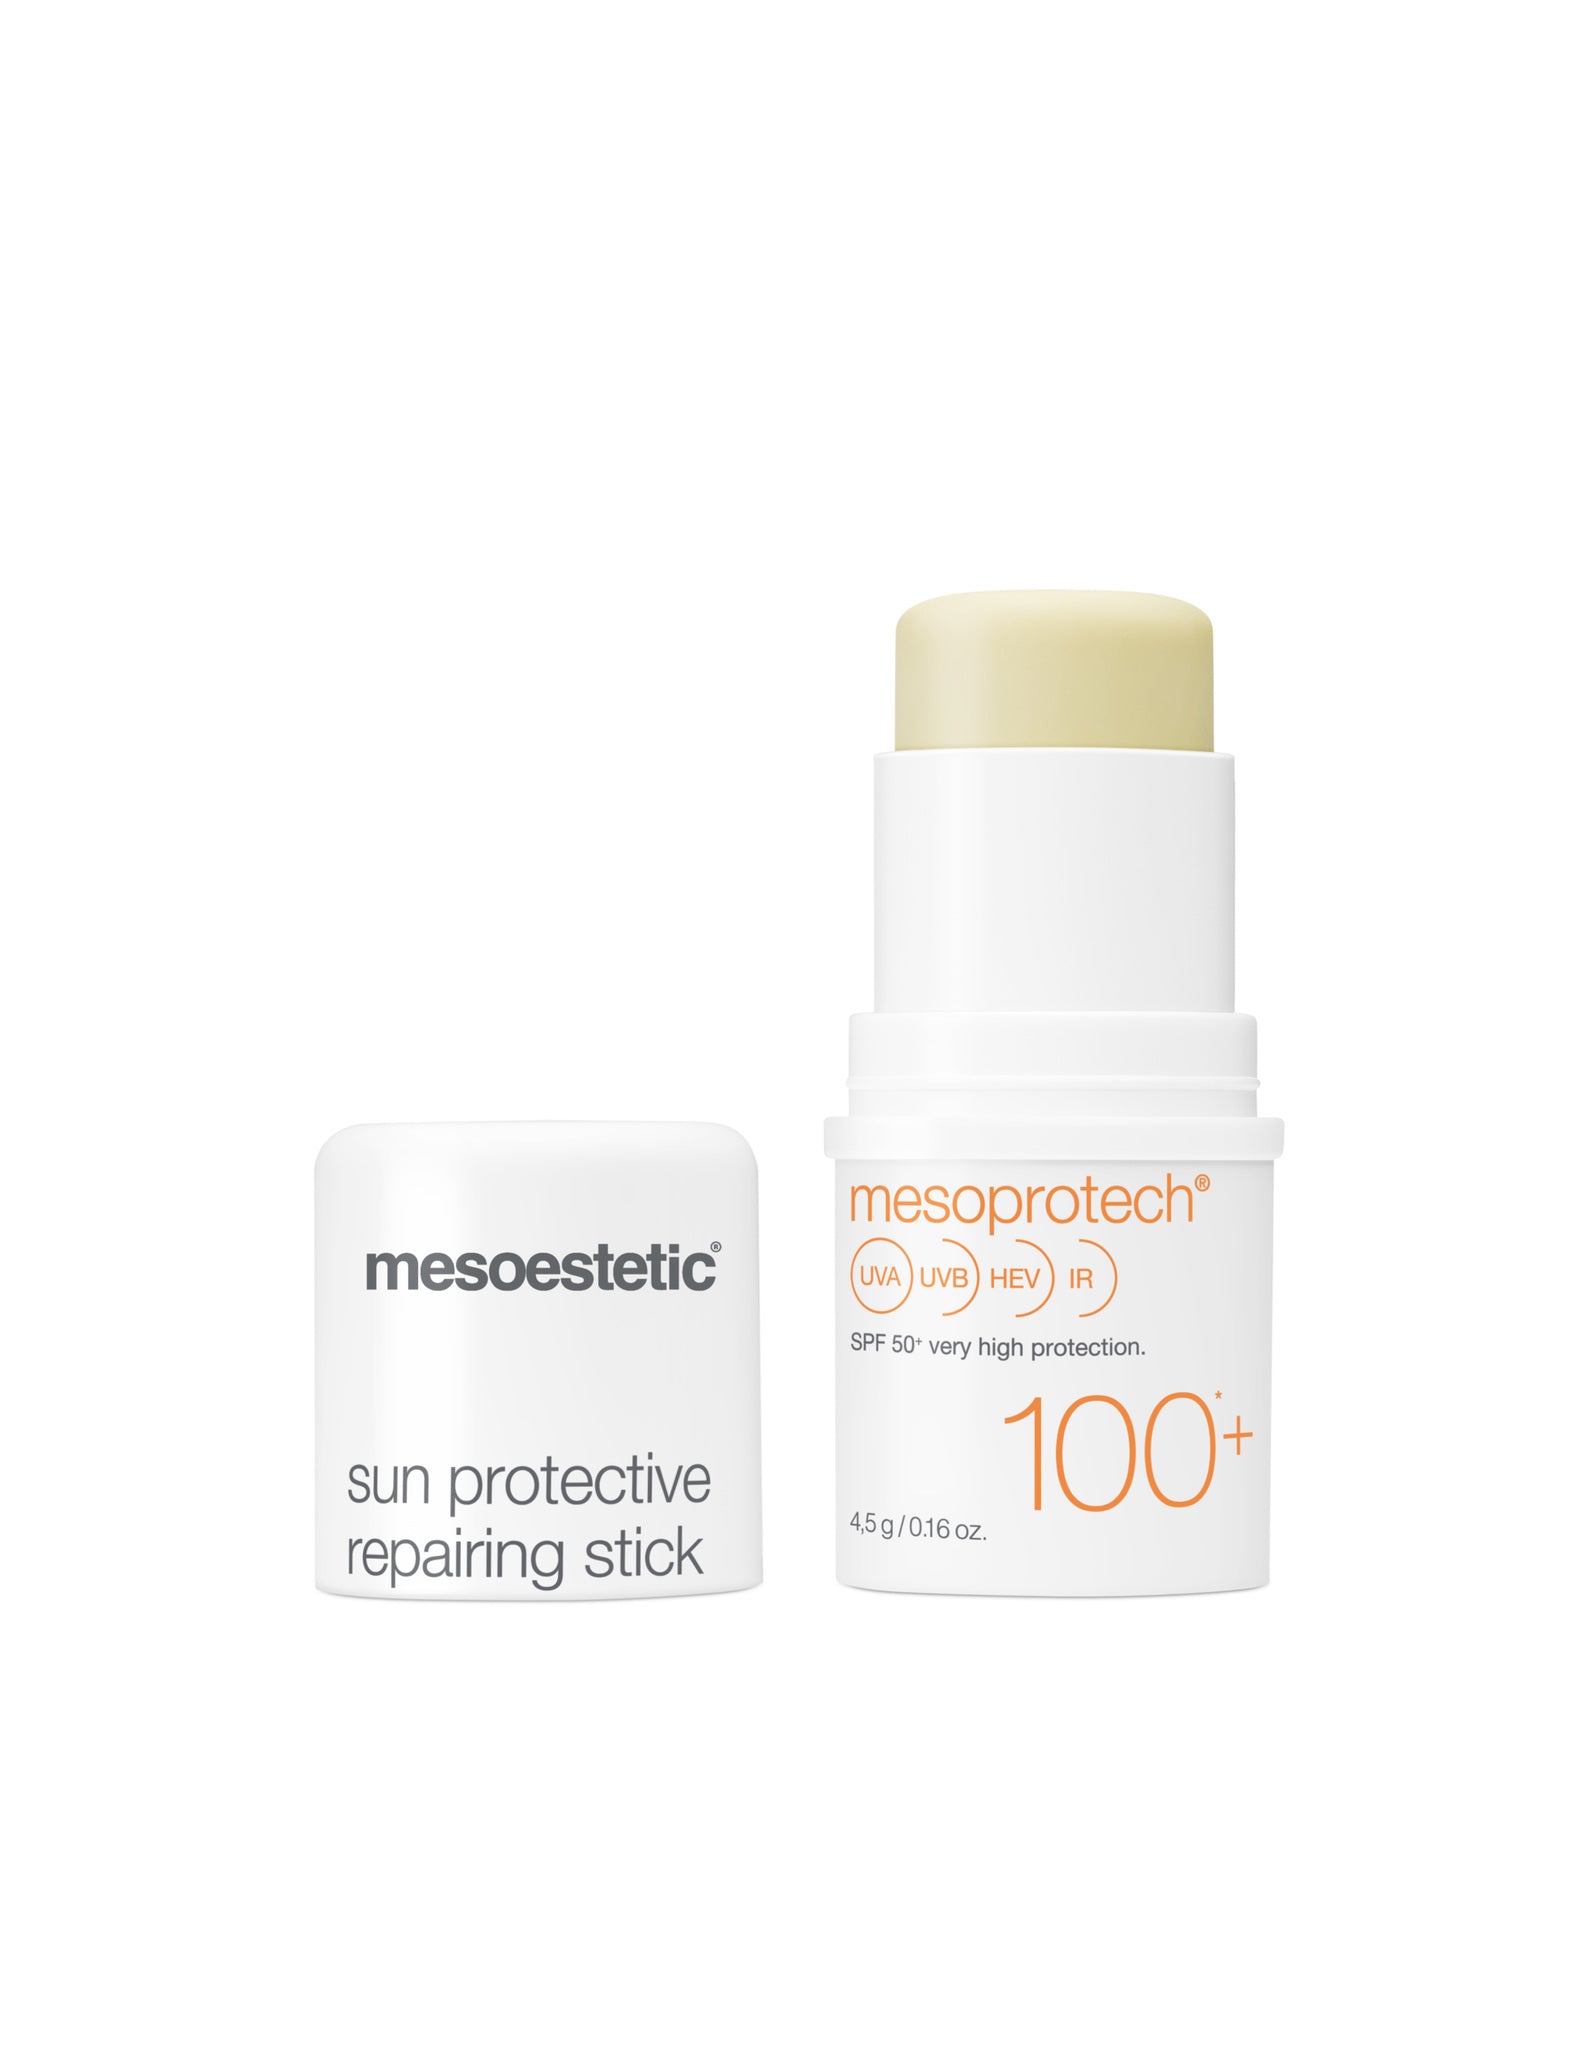 Mesoestetic Mesoprotech sun protective repairing stick 100+